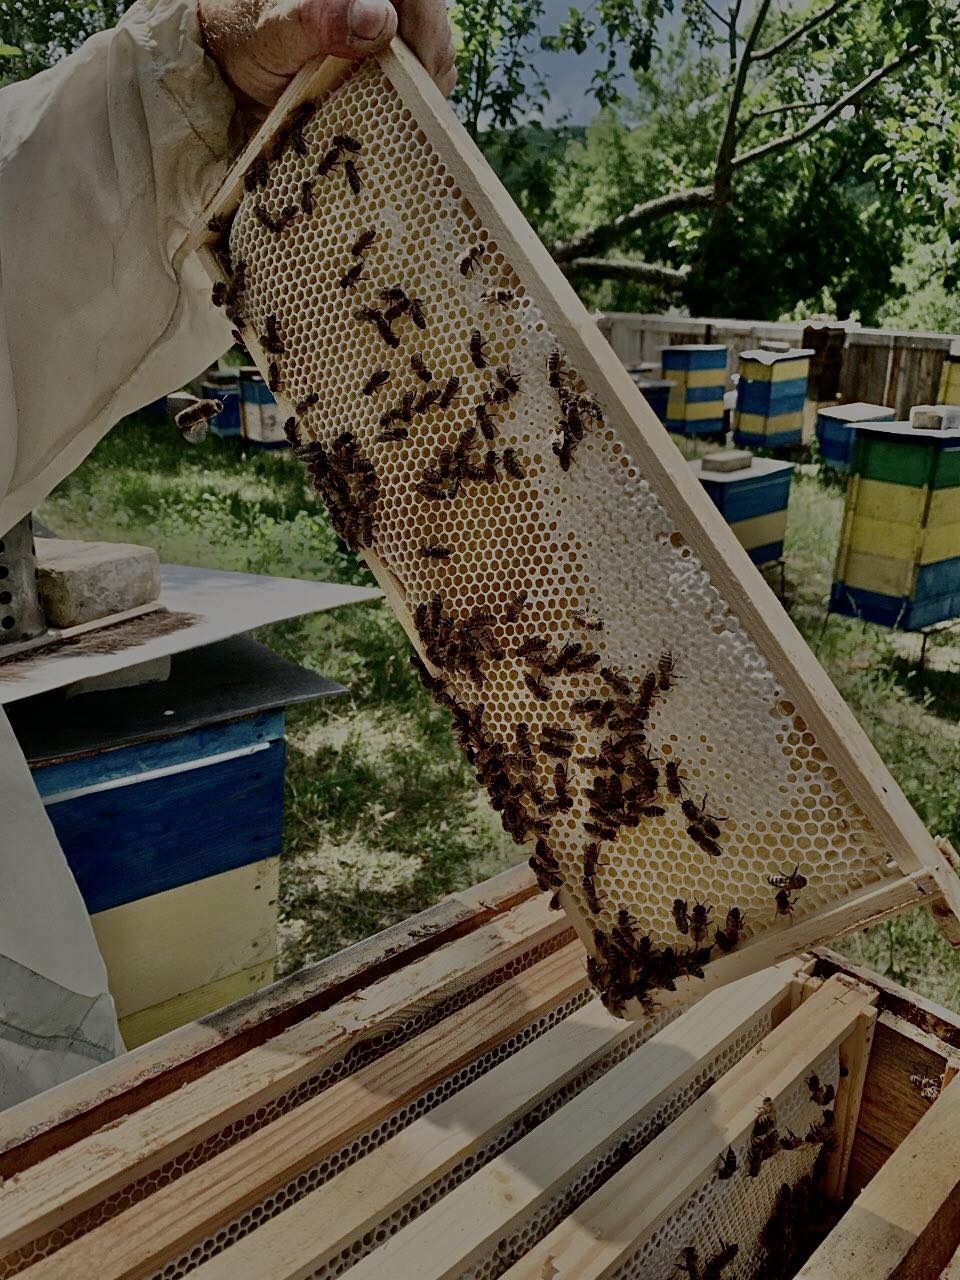 Бджолопакети, пчелопакеты